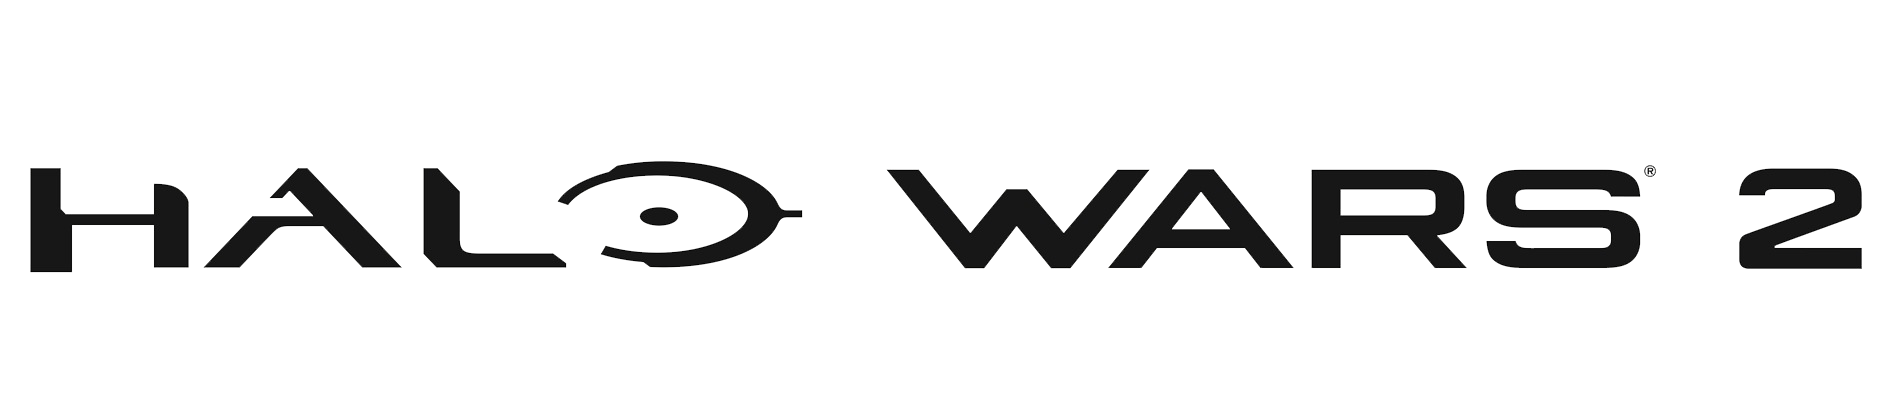 Halo Wars Logo Transparent Image PNG Image